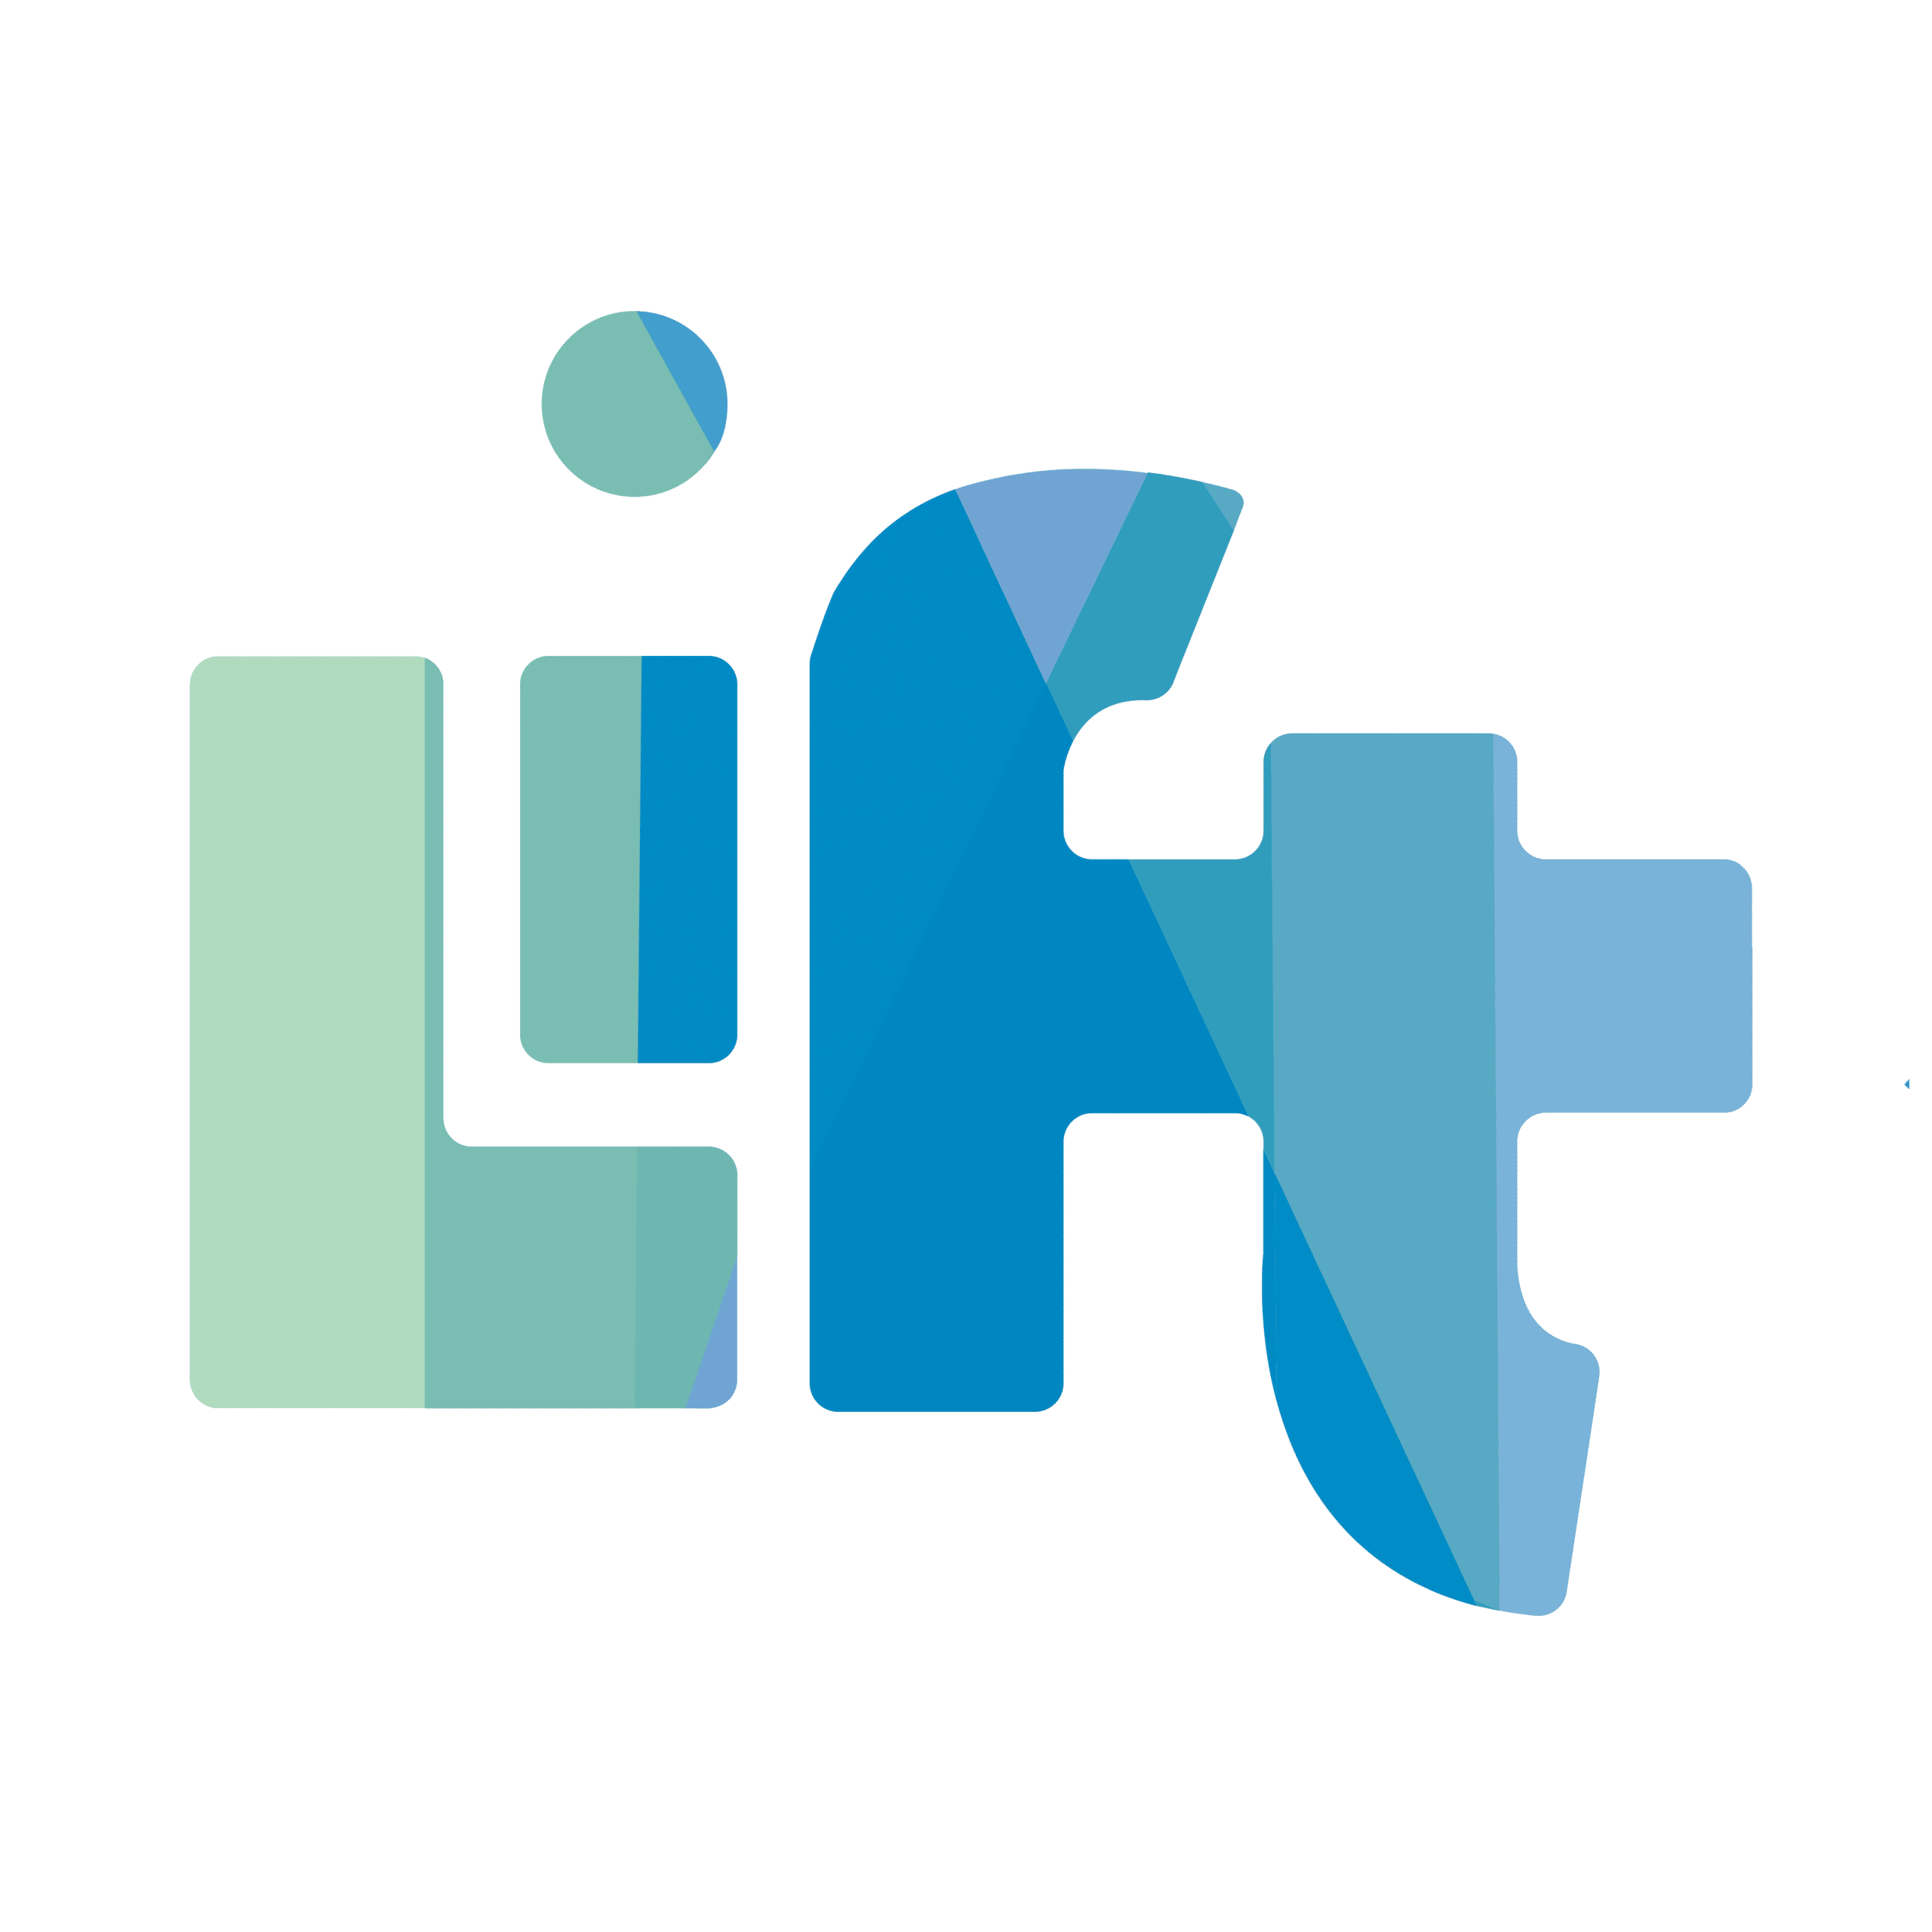 LIFT Startups